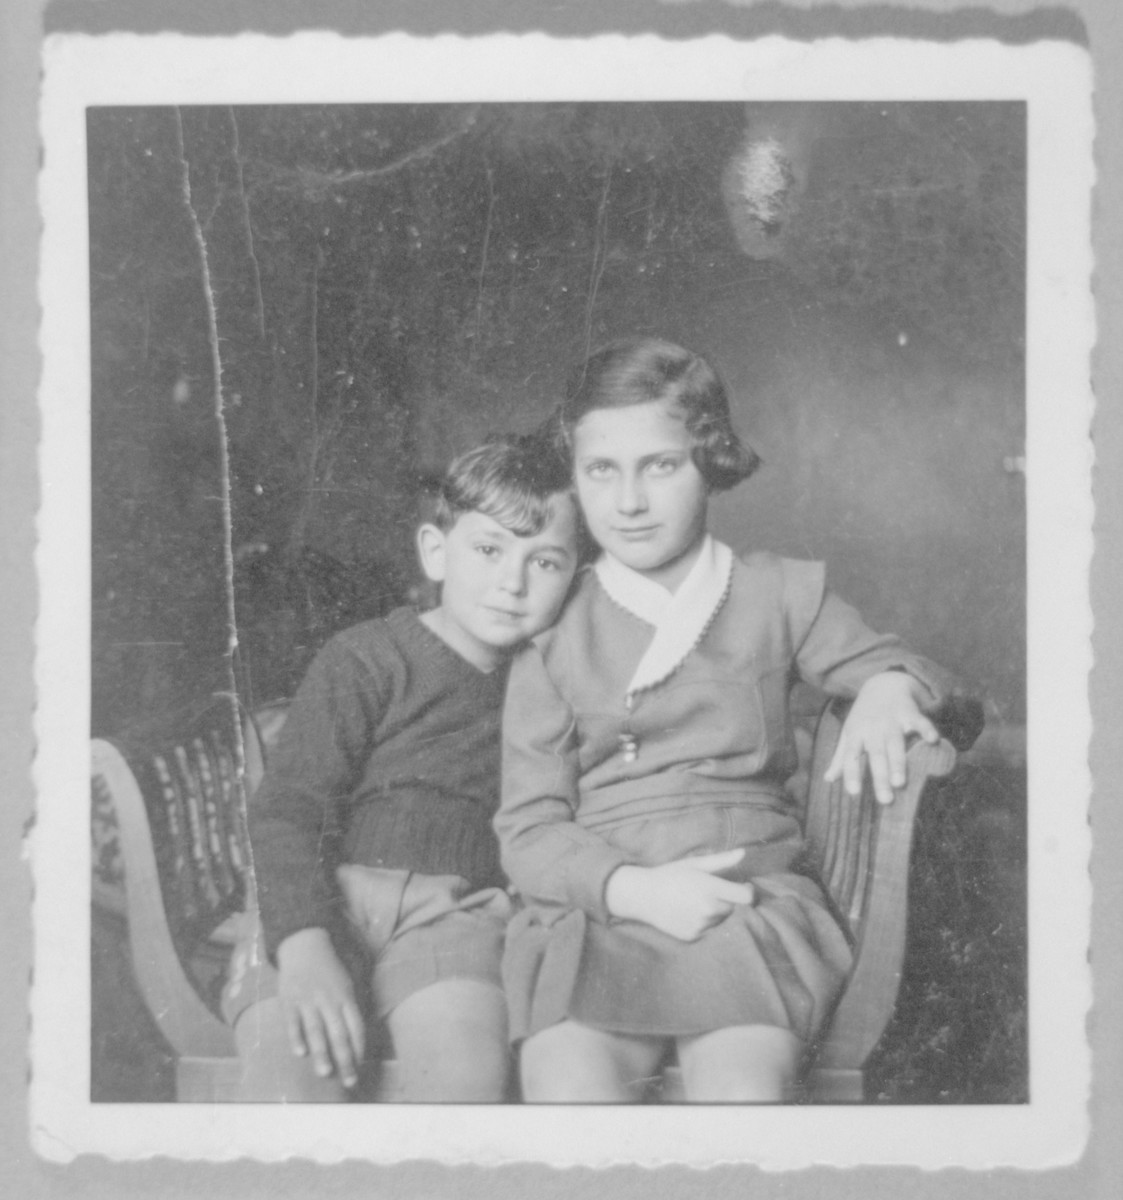 Roman Frister poses with his cousin Jadwiga Rosenstock (later Wiener).